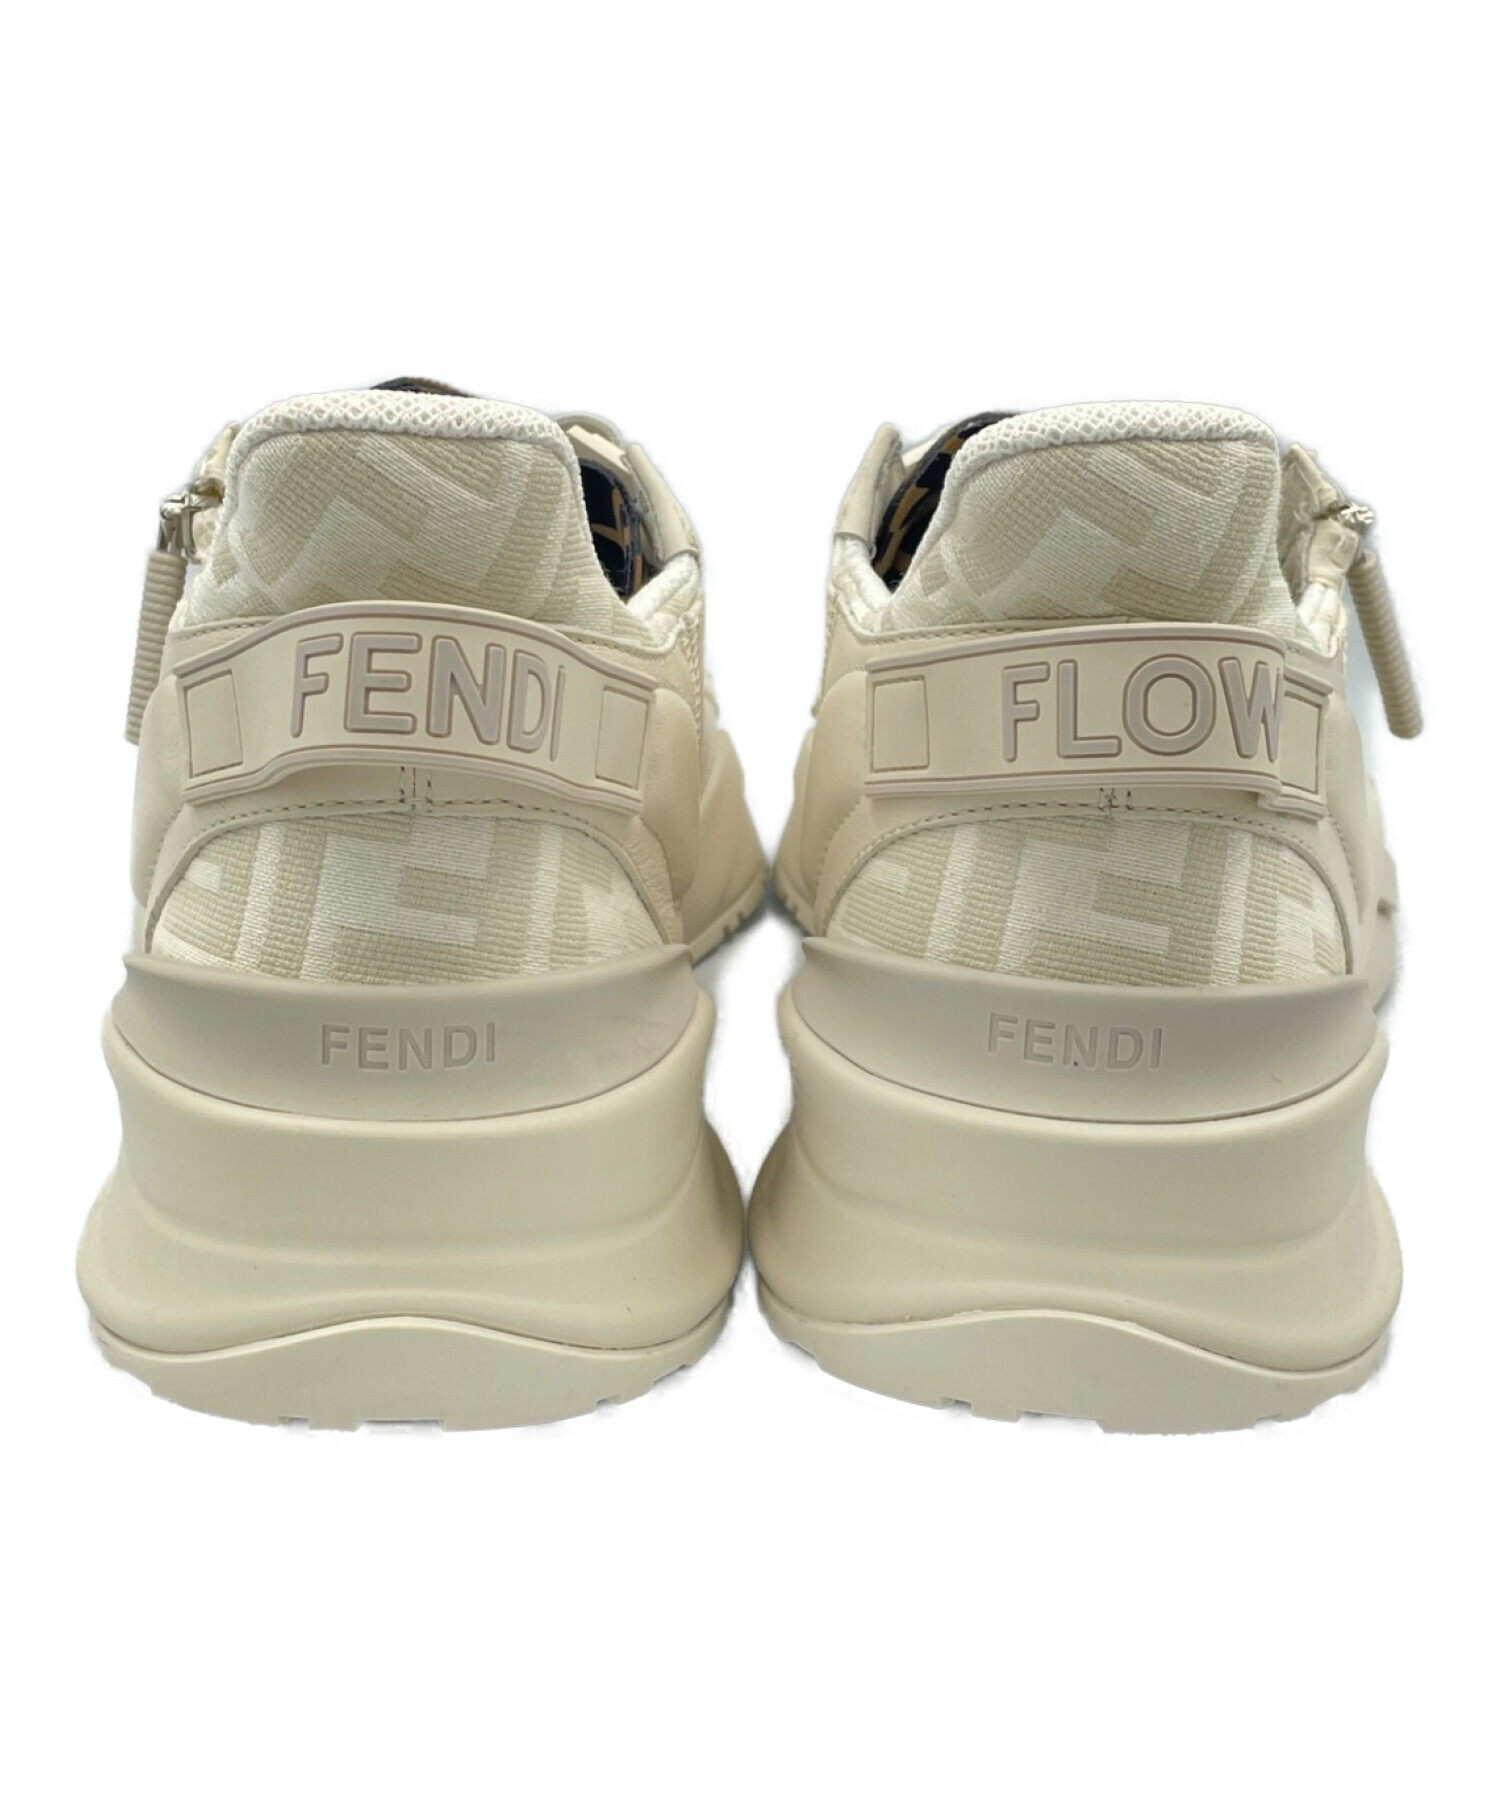 FENDI (フェンディ) FLOW スニーカー アイボリー サイズ:8